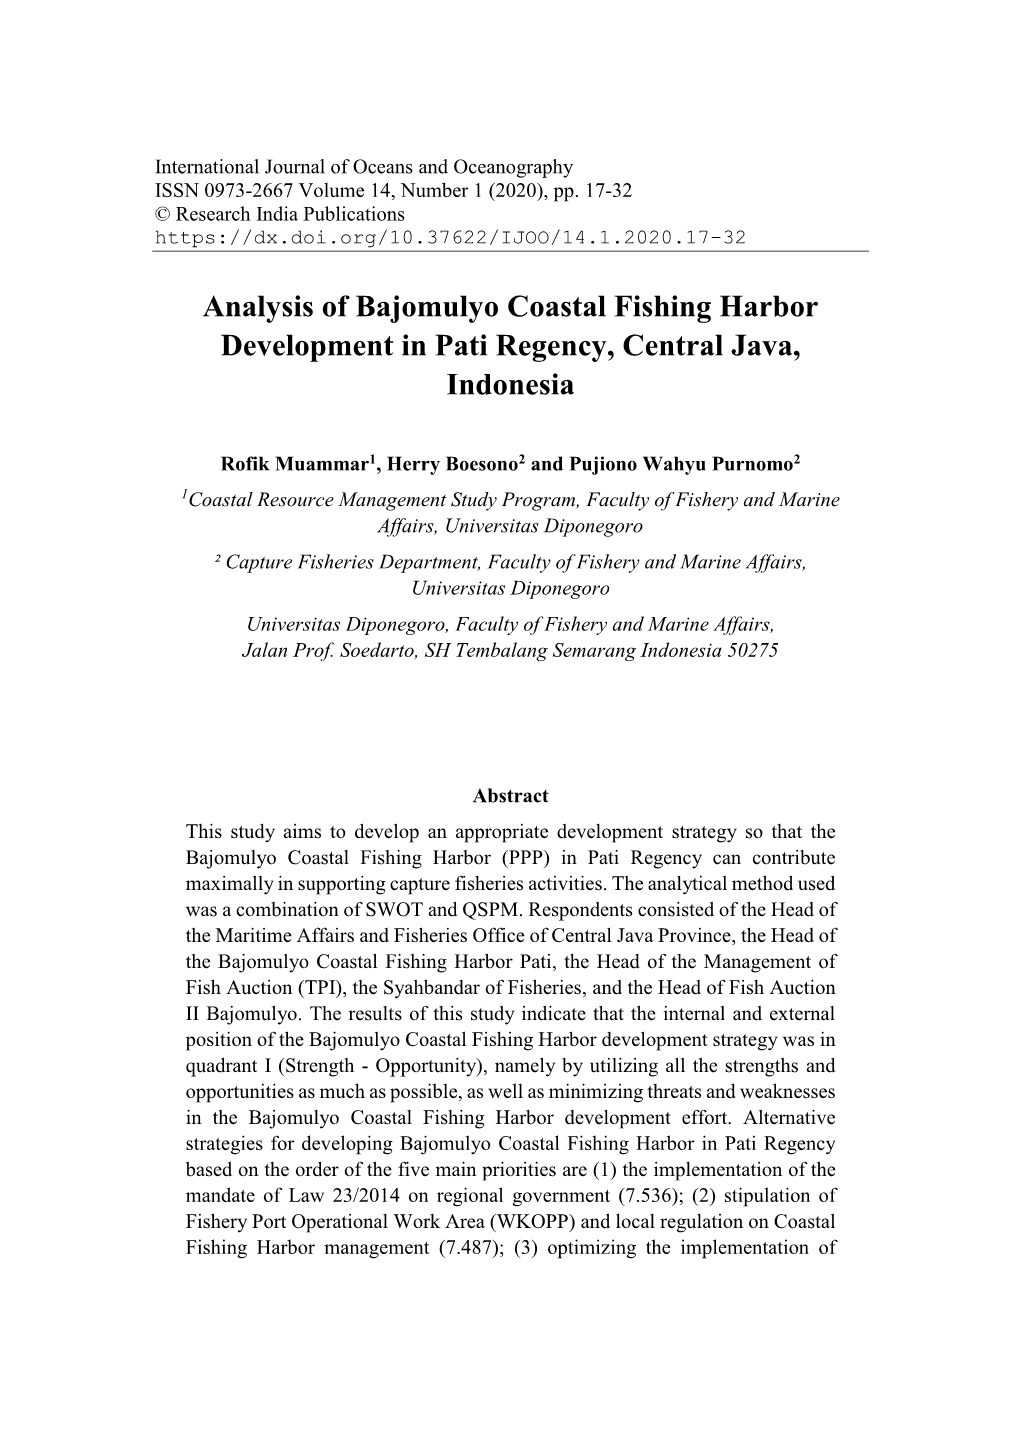 Analysis of Bajomulyo Coastal Fishing Harbor Development in Pati Regency, Central Java, Indonesia